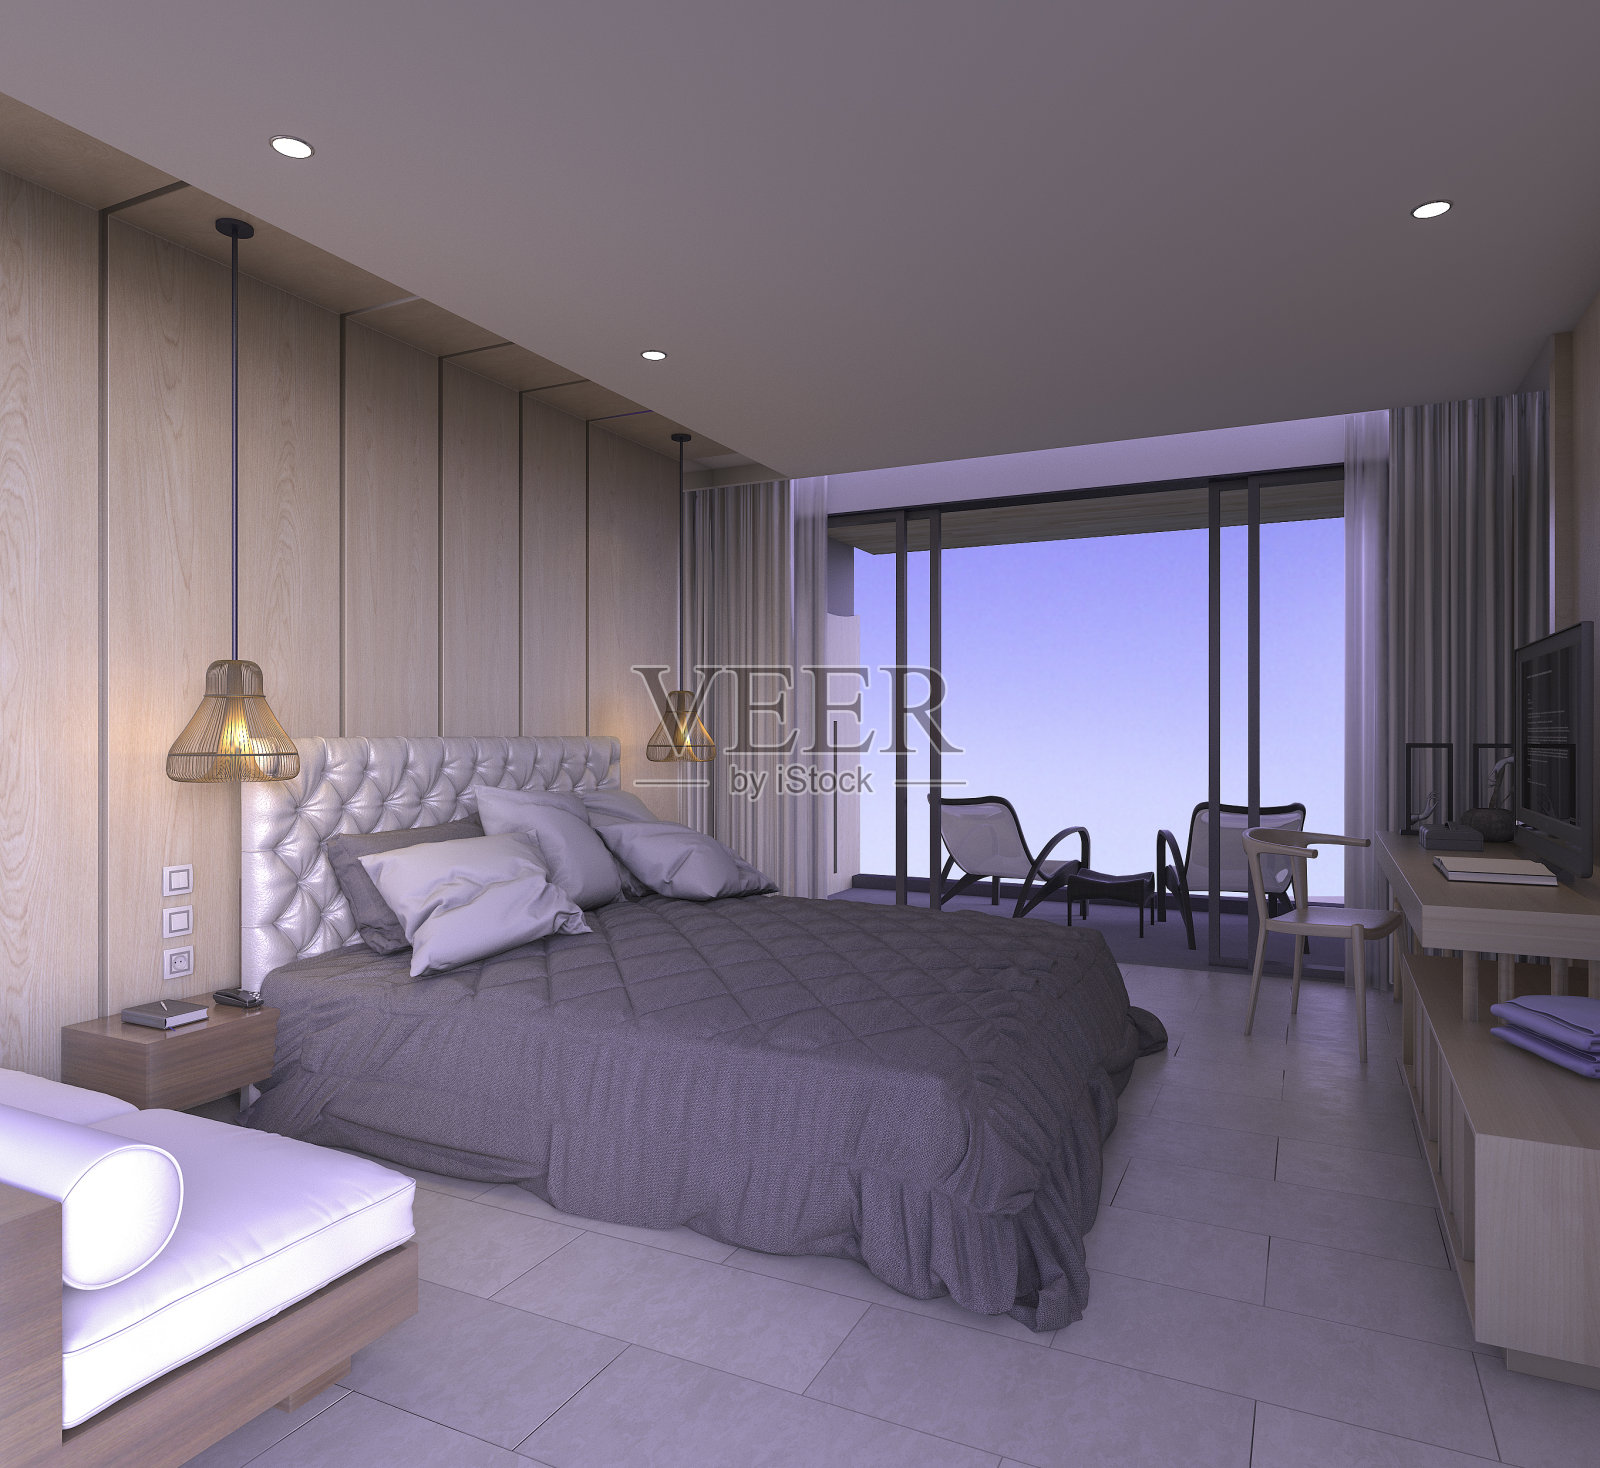 3d渲染漂亮的视图卧室与豪华设计与装饰照片摄影图片